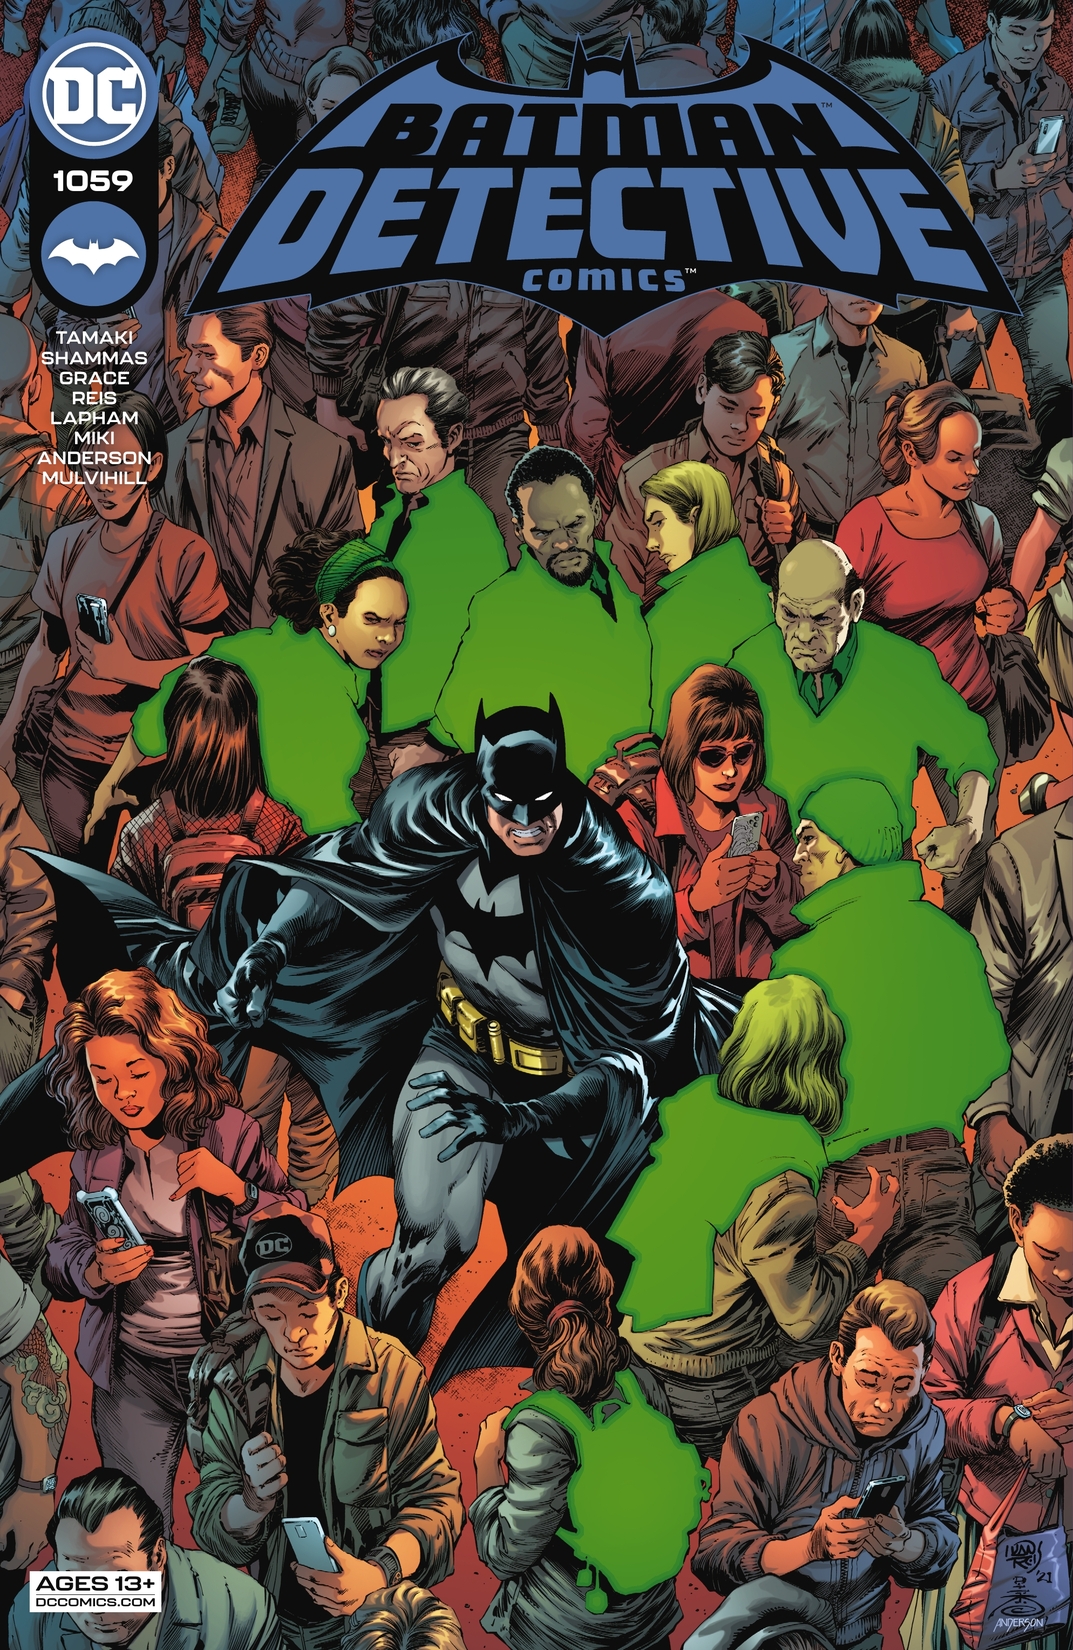 Detective Comics (2016-) #1059 preview images